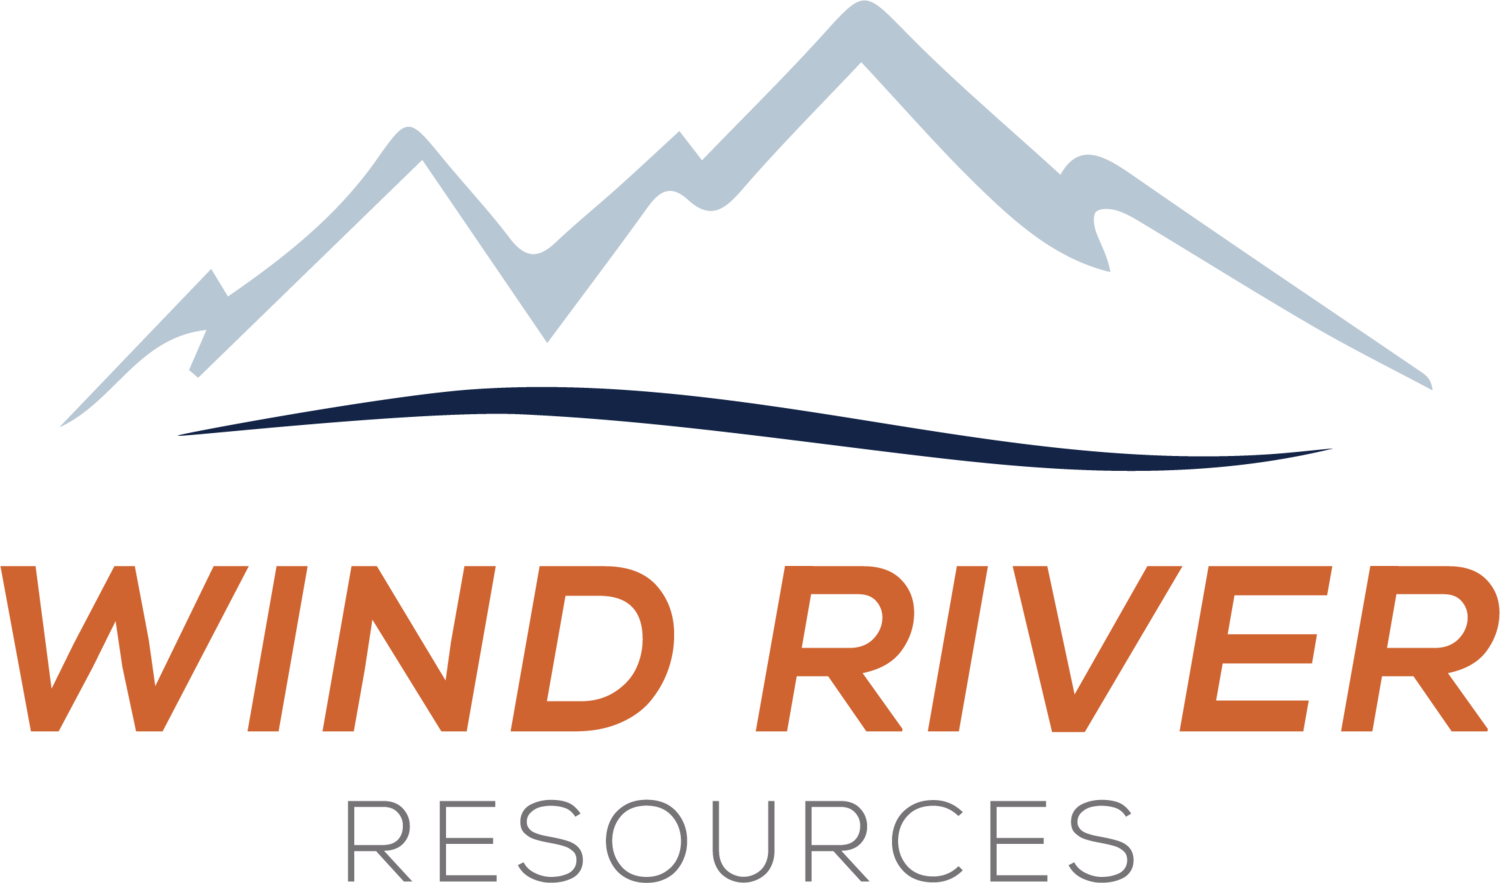 Wind River Resources,LLC